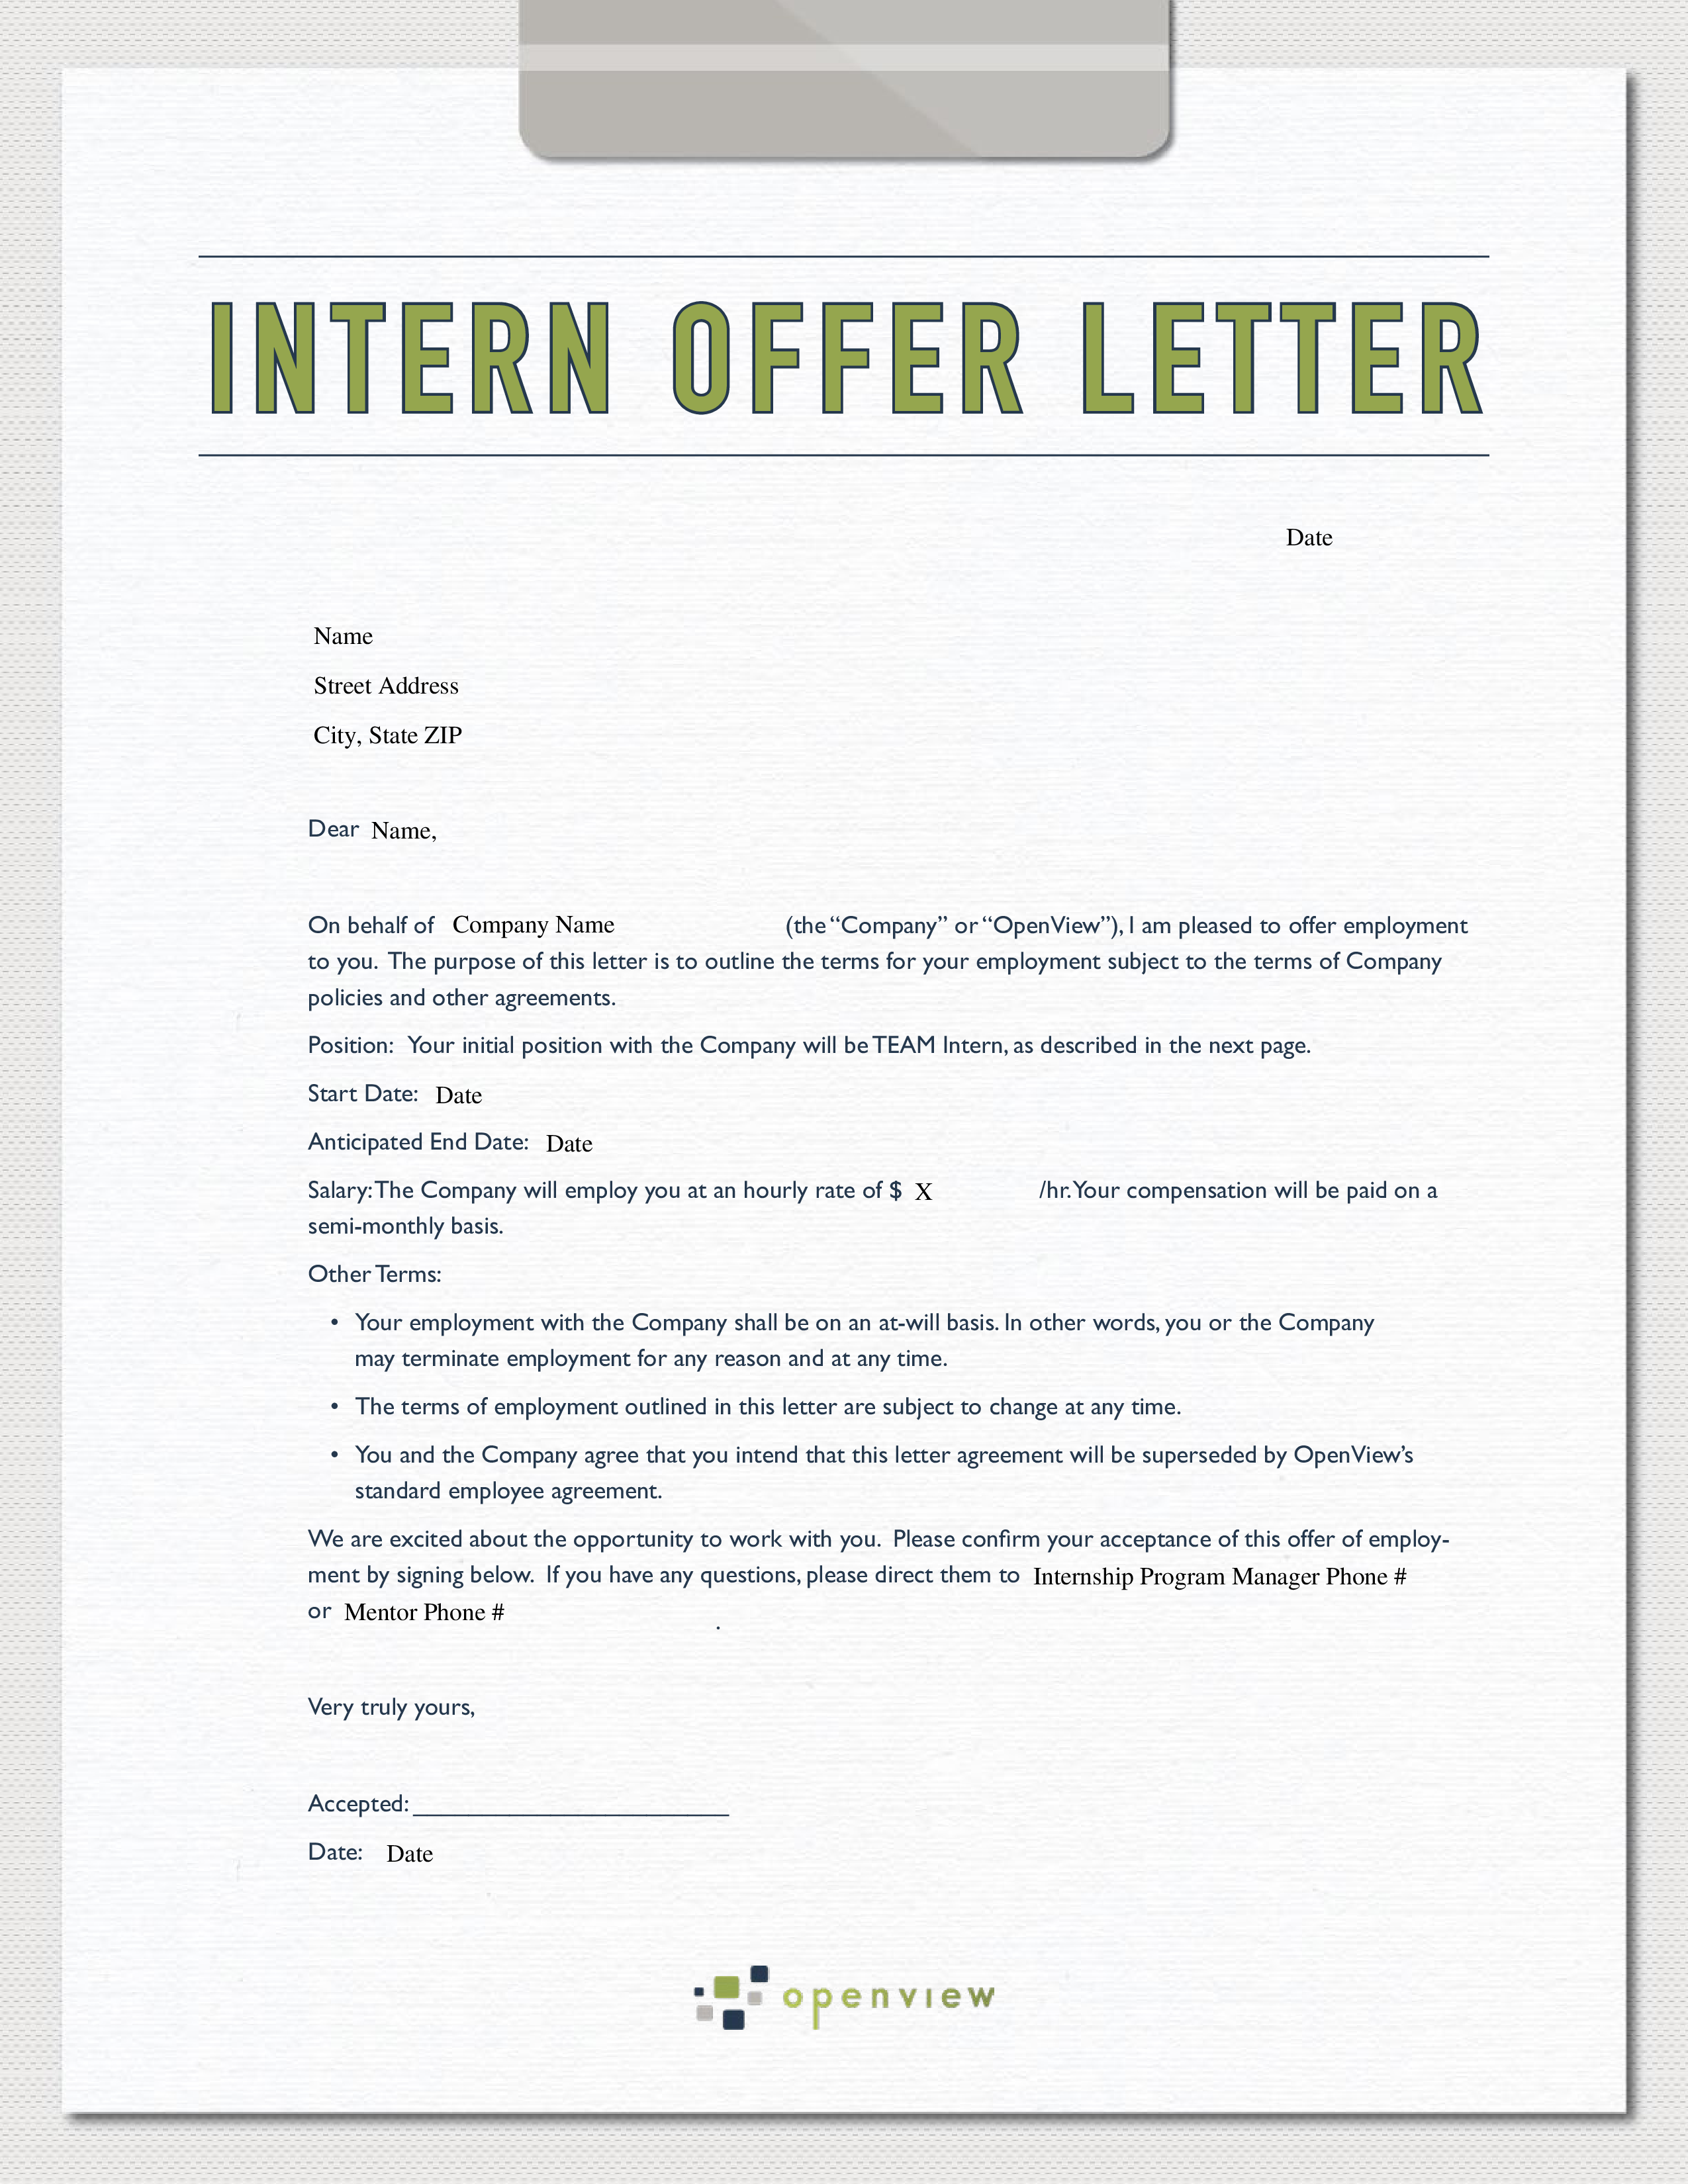 Sample Marketing Internship Offer Letter 模板